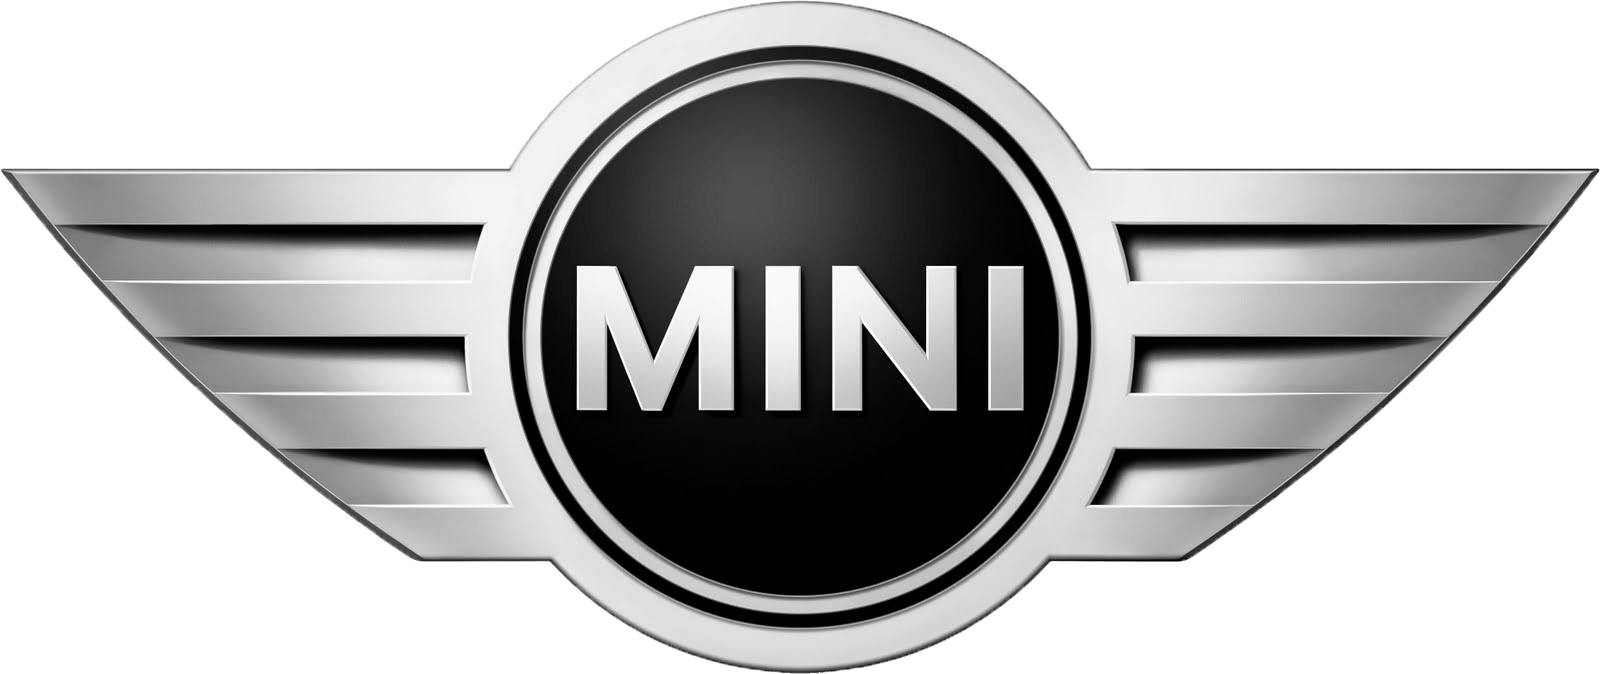 New Mini Cooper Logo - Mini Cooper logo. The Next Wave